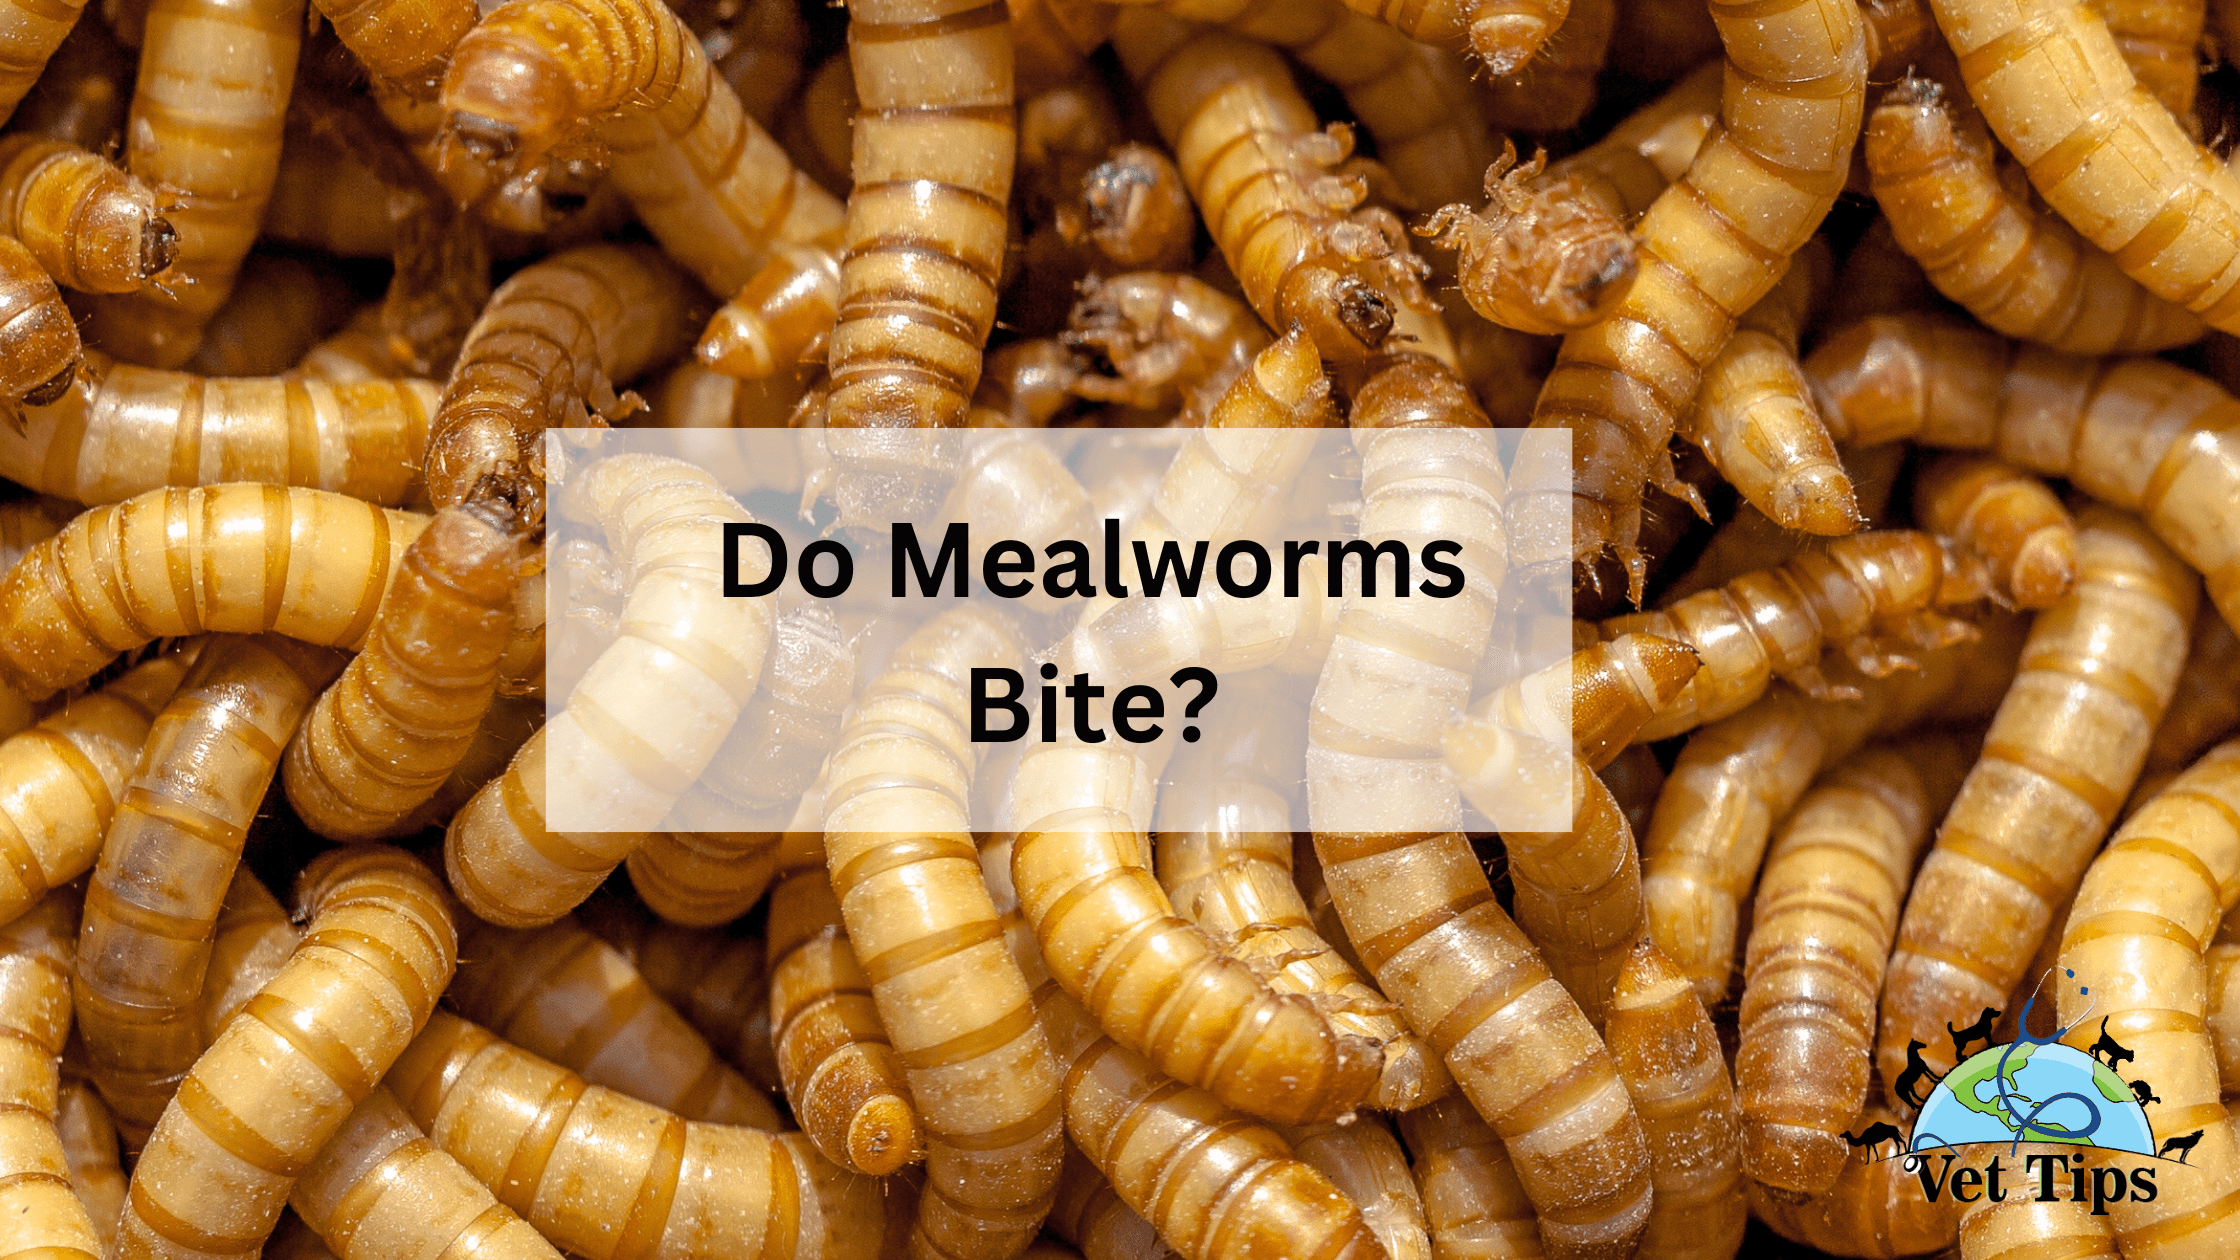 Do mealworms bite?